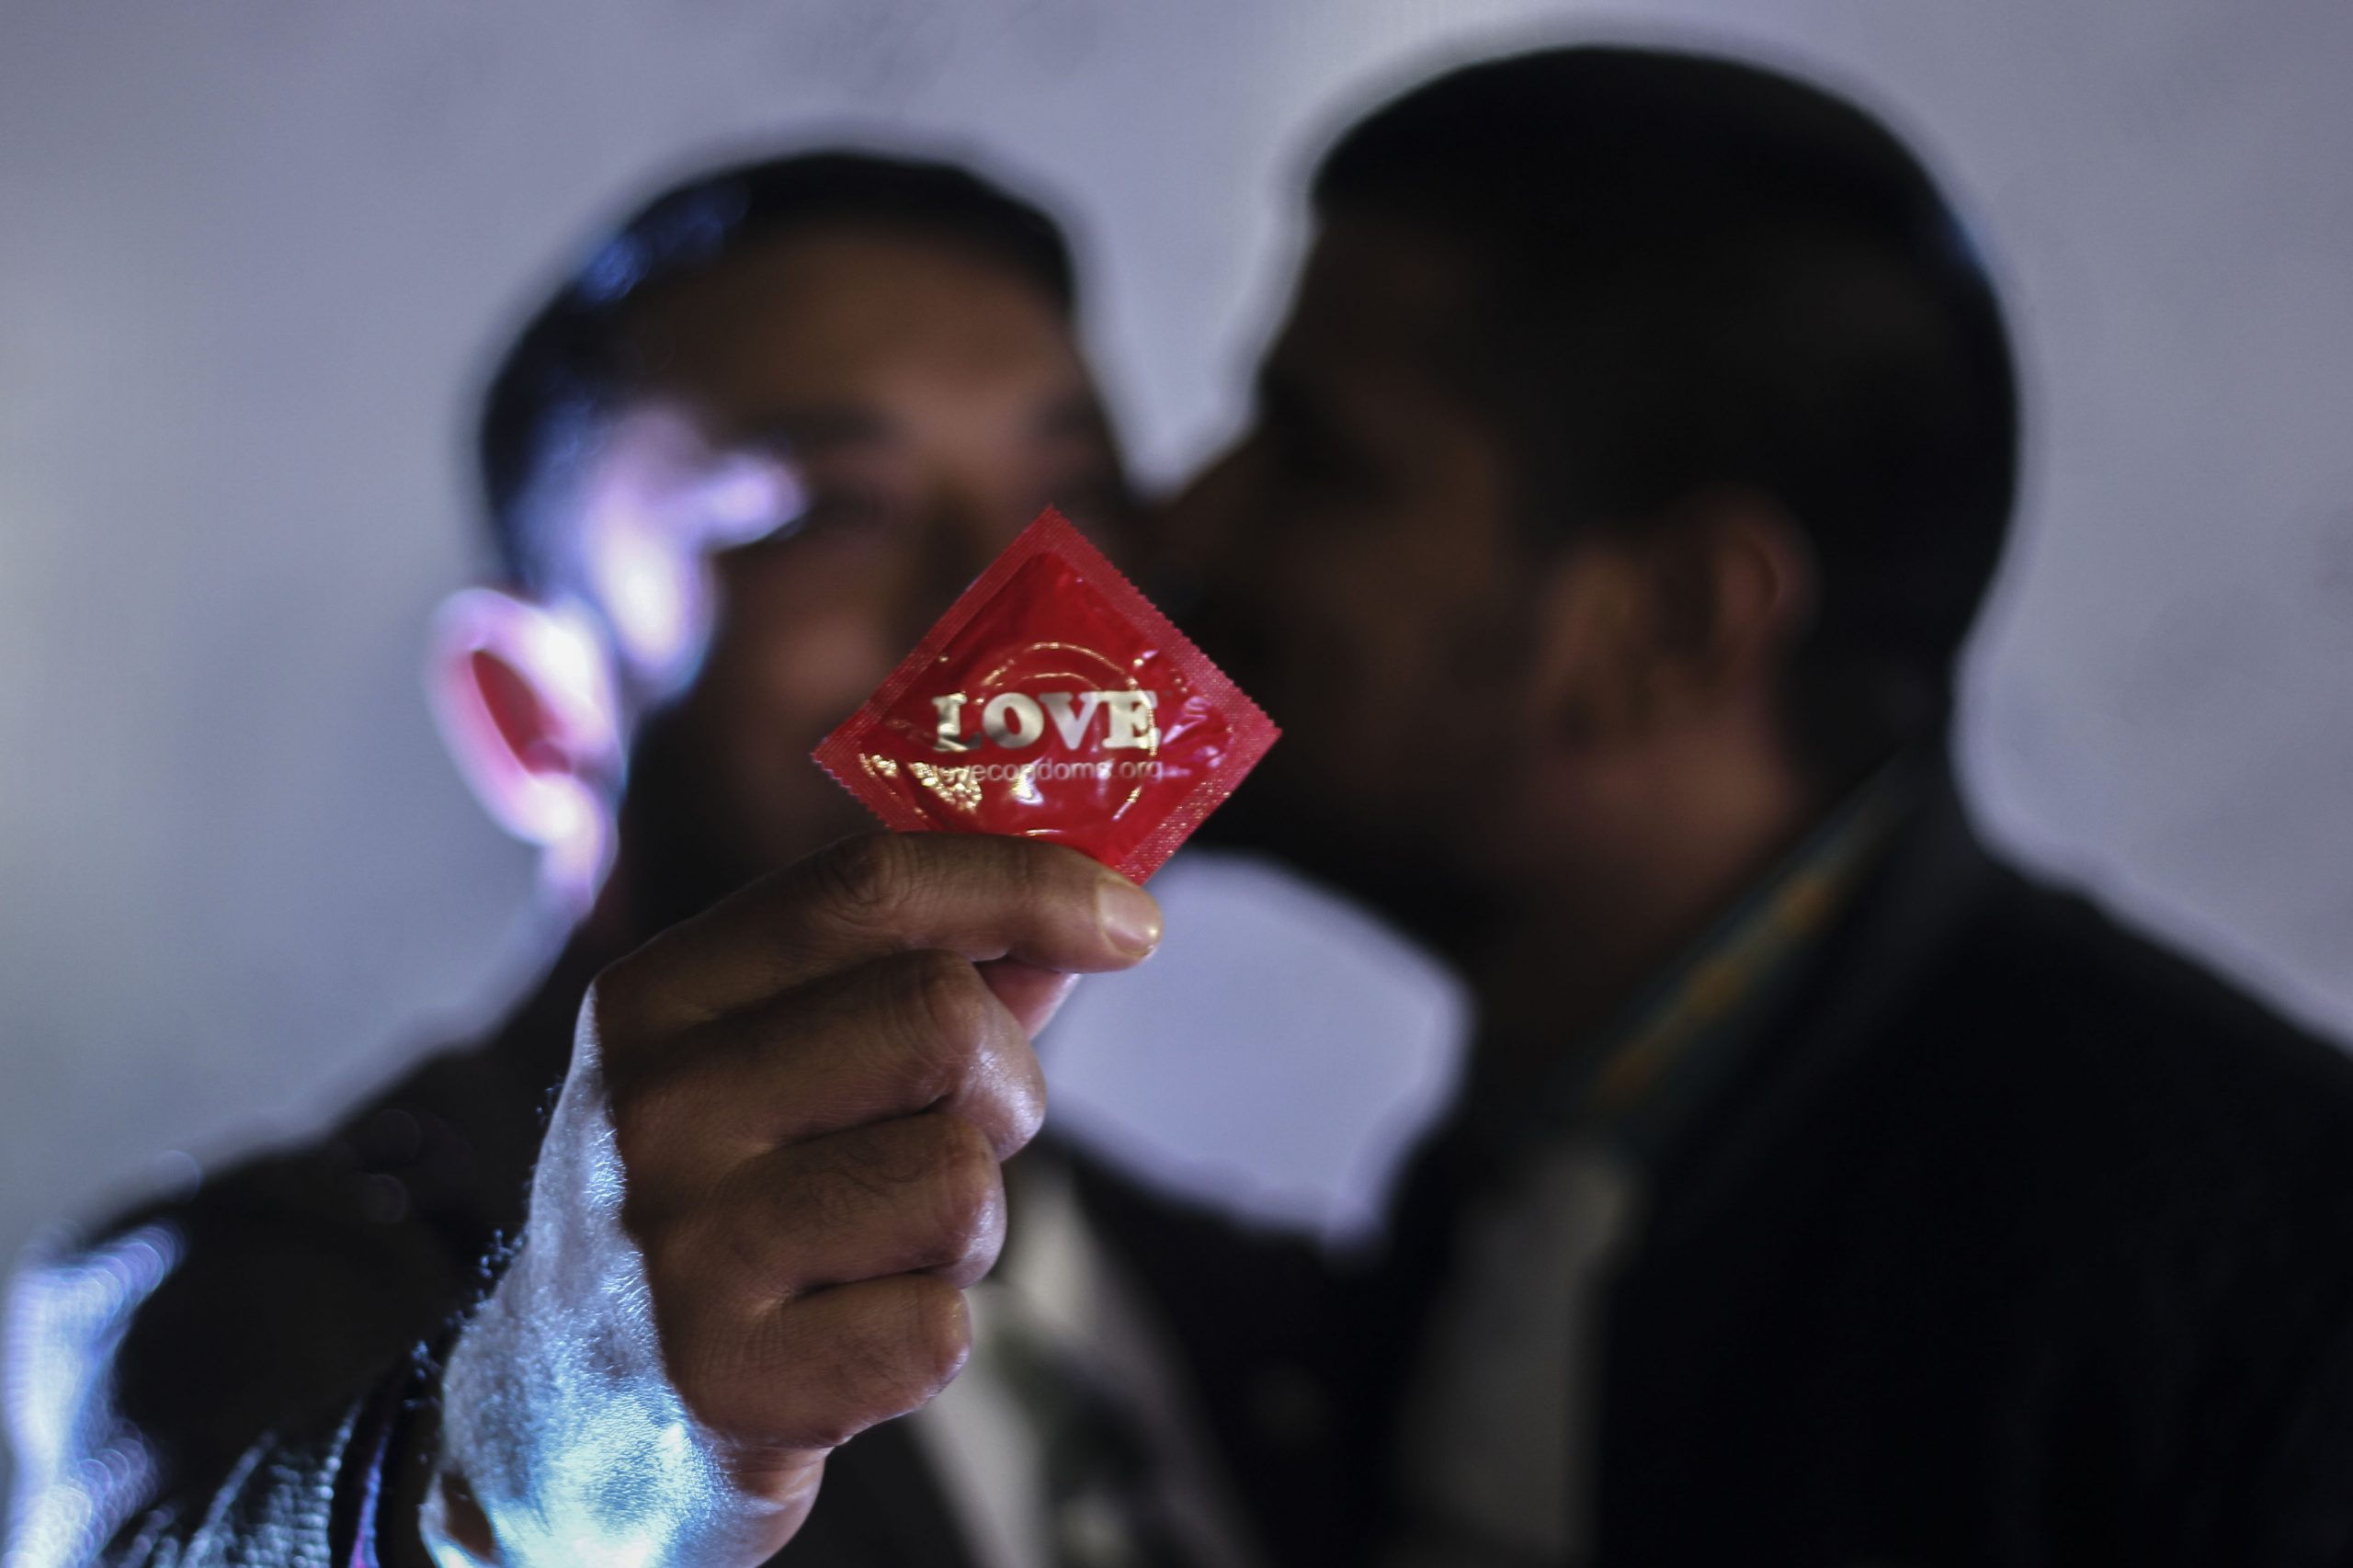 Love Sex (Use Condom) NO Dhokha – Talking Condoms on 13 February!